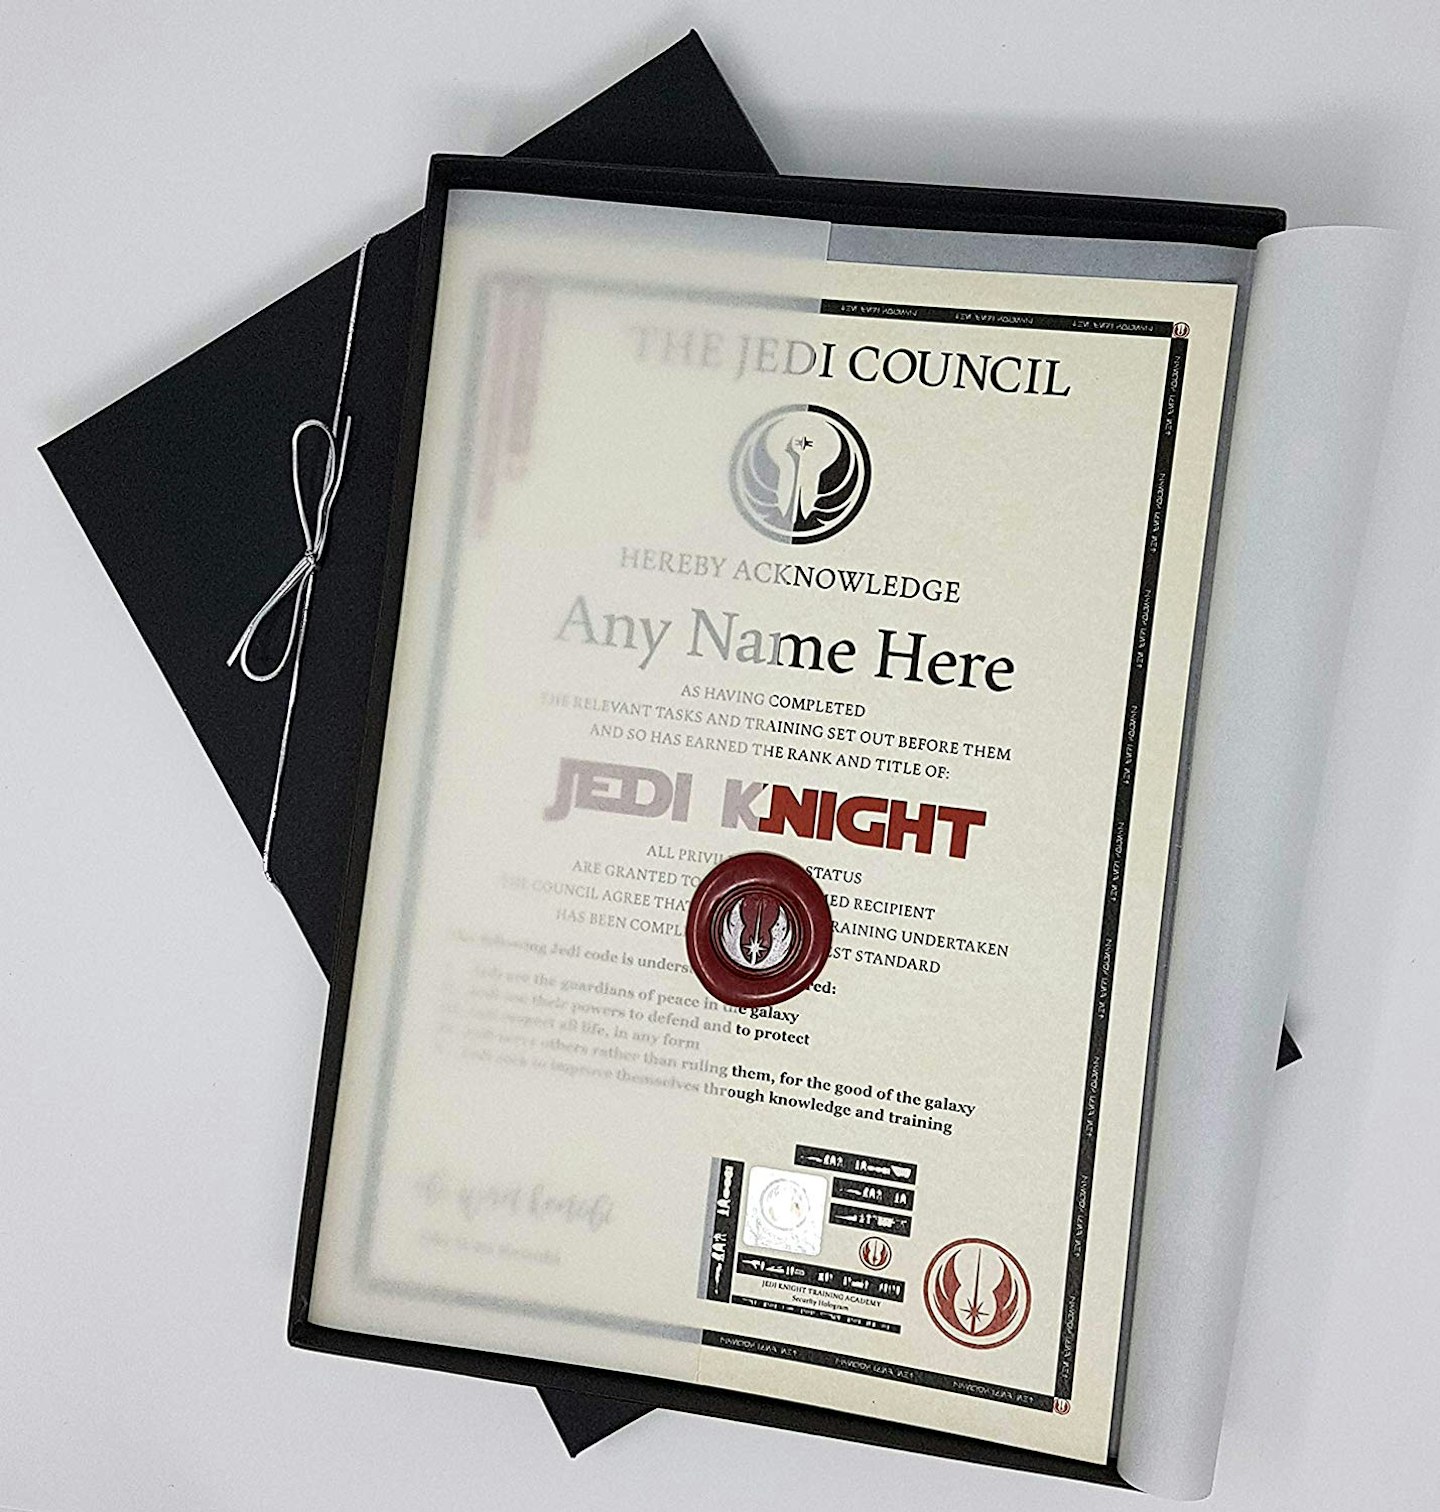 Star Wars Jedi Knight Personalized Certificate - Deluxe Gift Box Set, £19.99